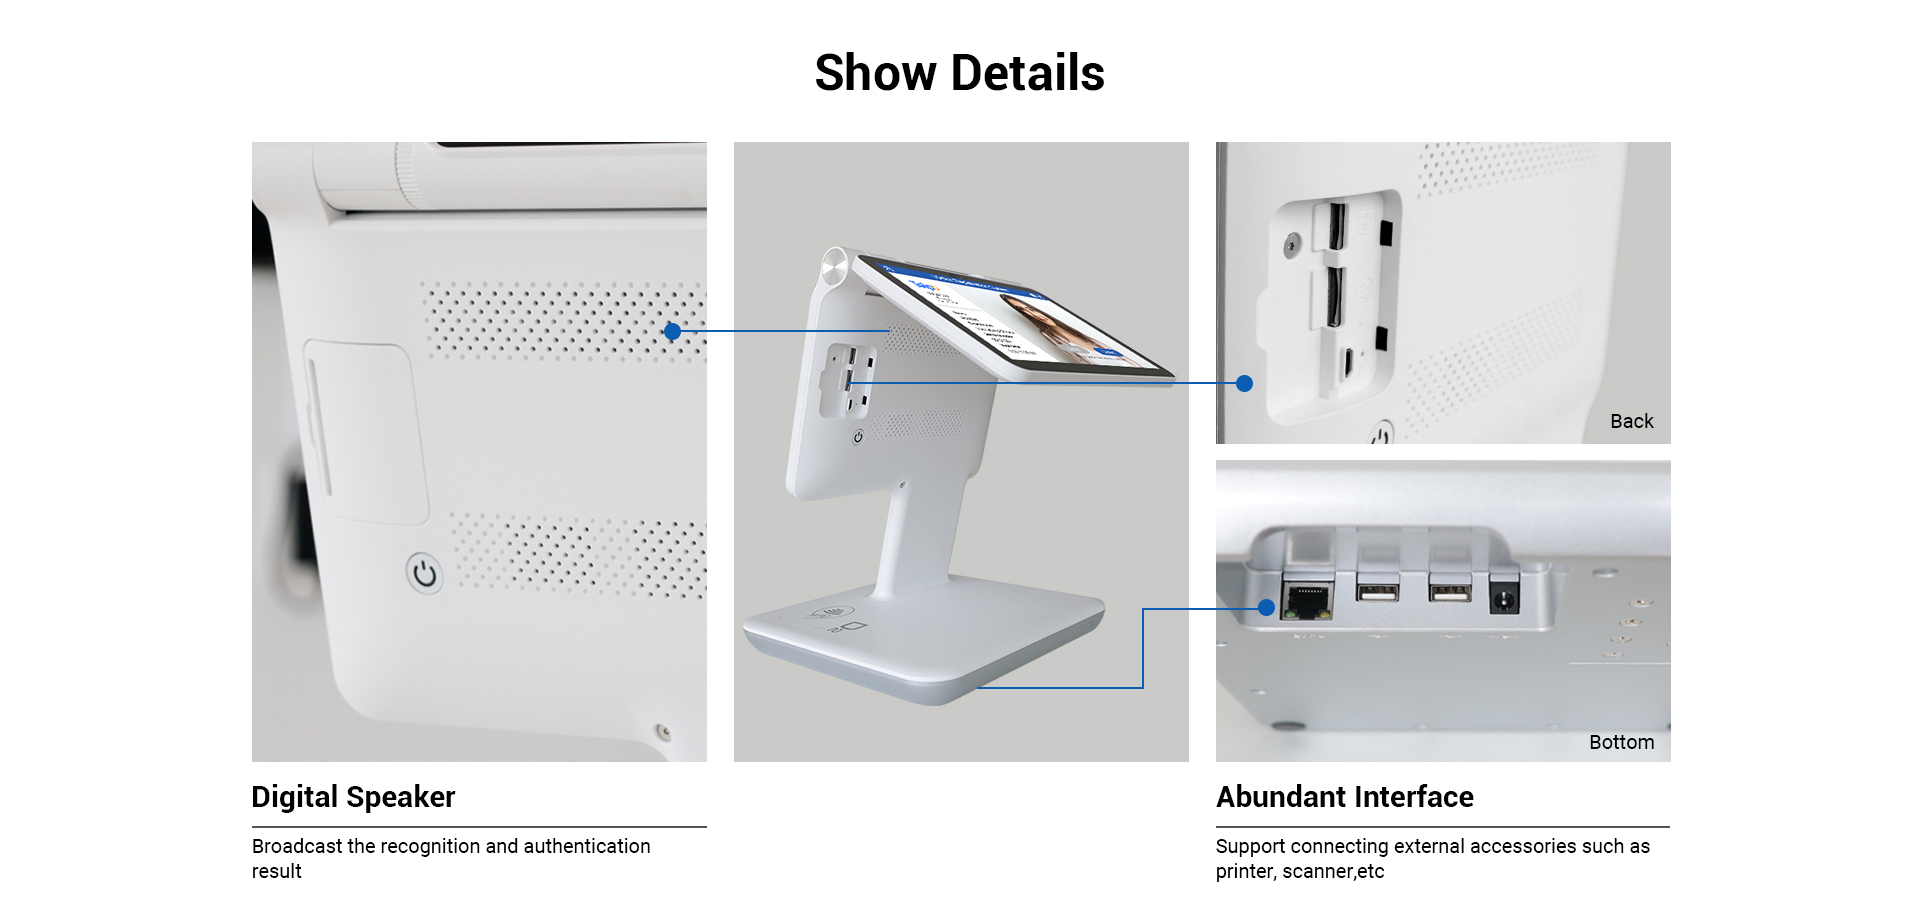 Details of Telpo D2 with Digital speaker, Heat Emission Hole, Abundant Interface